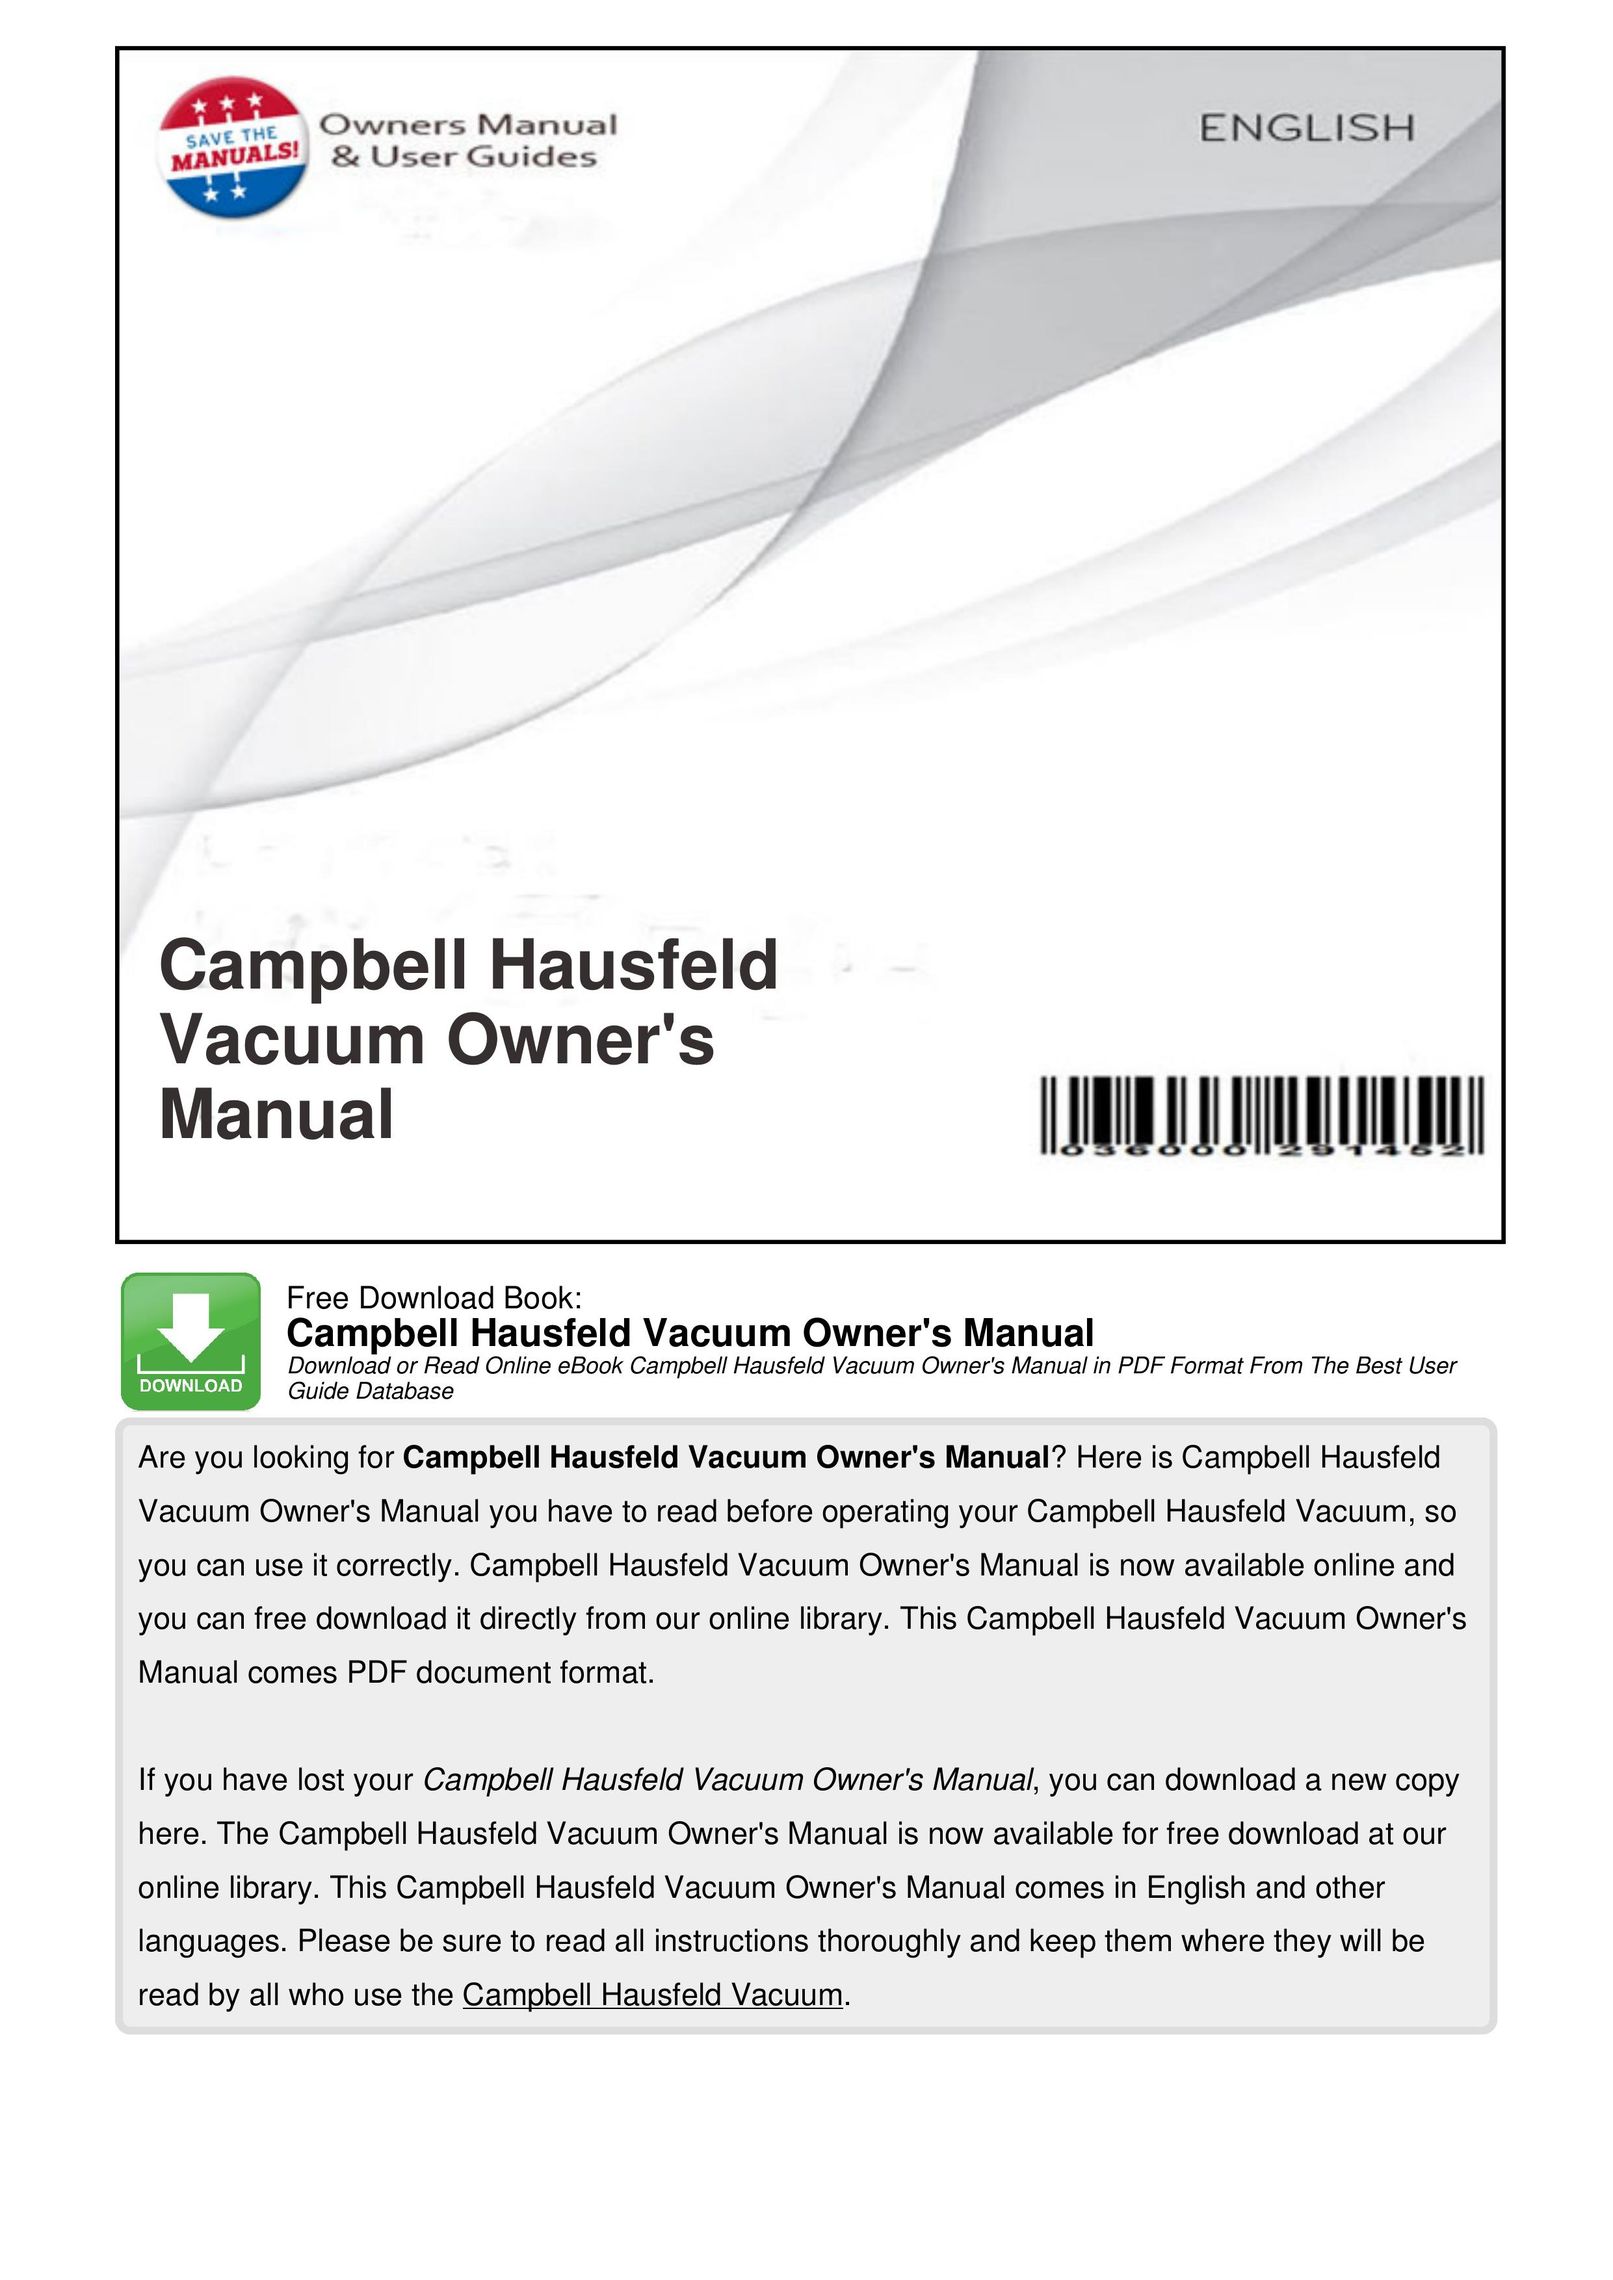 Campbell Hausfeld DH5500 Paint Sprayer User Manual